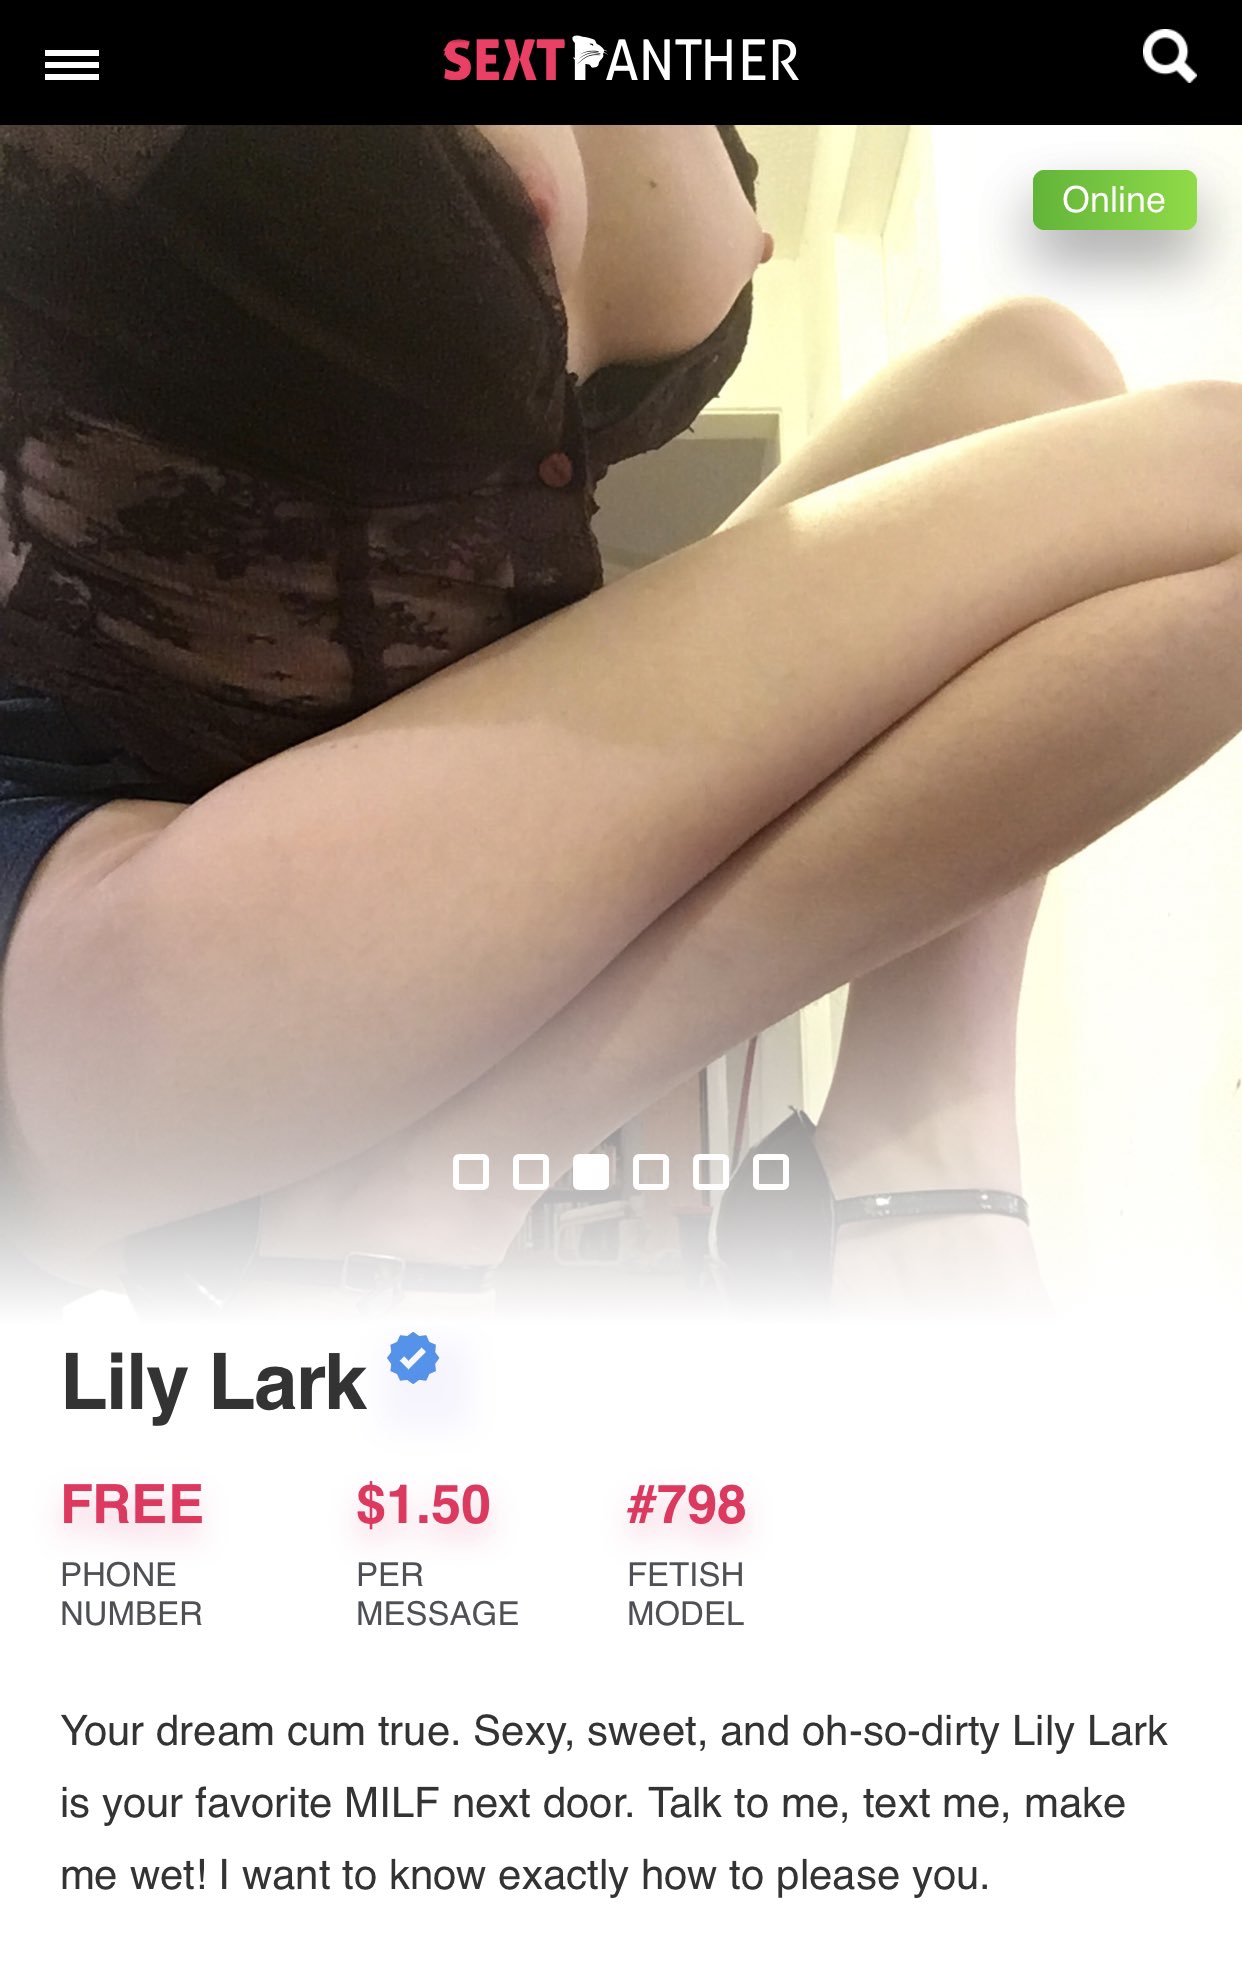 TW Pornstars - Lily Lark. Twitter